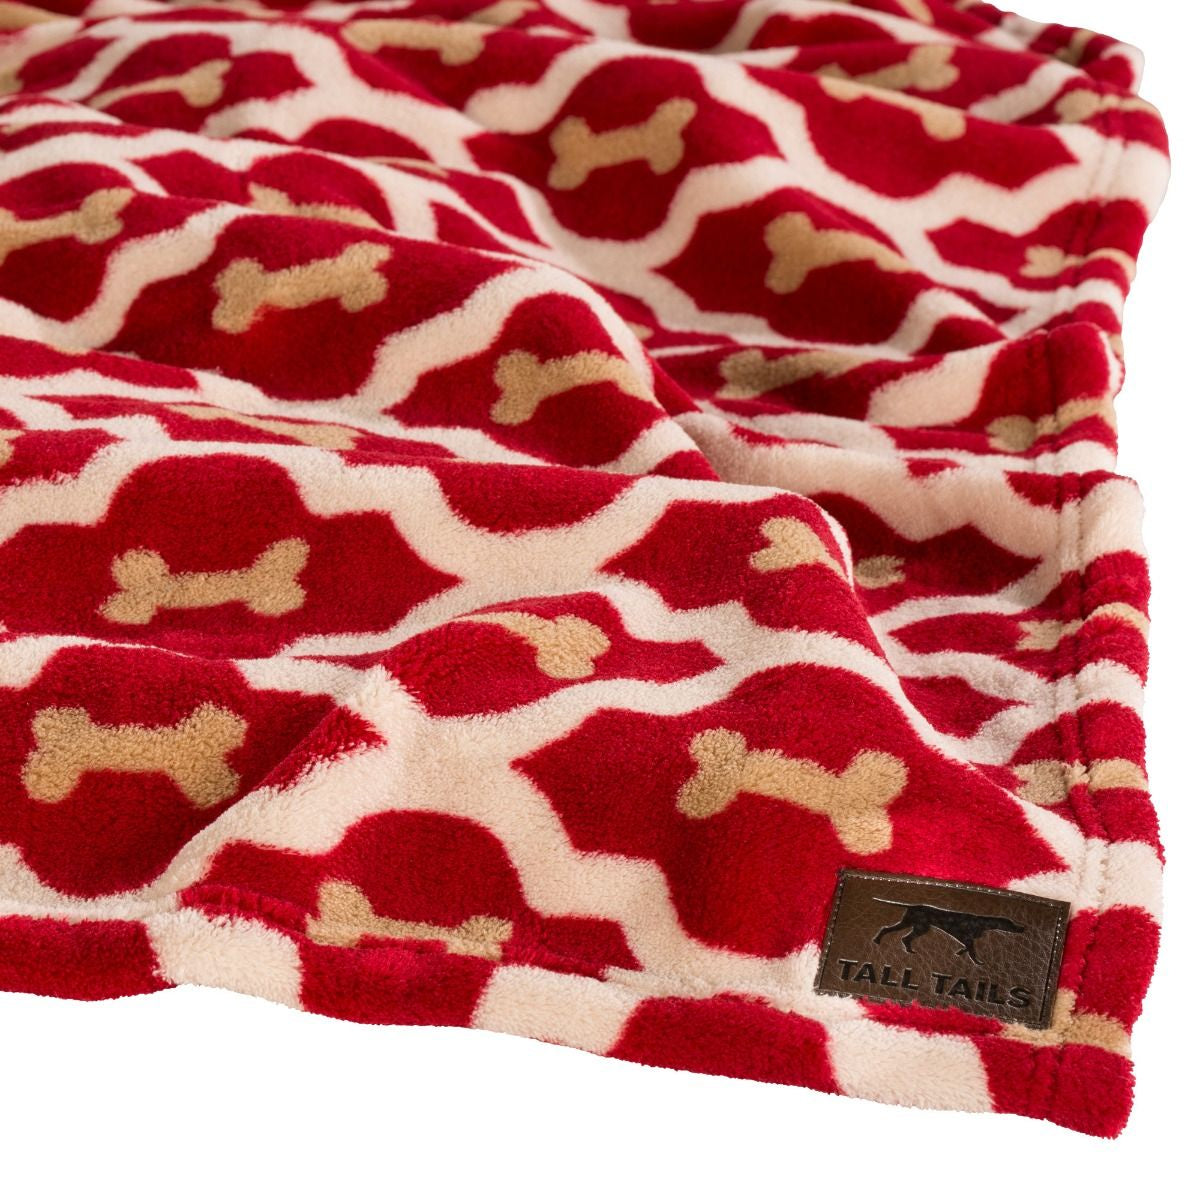 Tall Tails Baby-Soft Fleece Dog Blanket